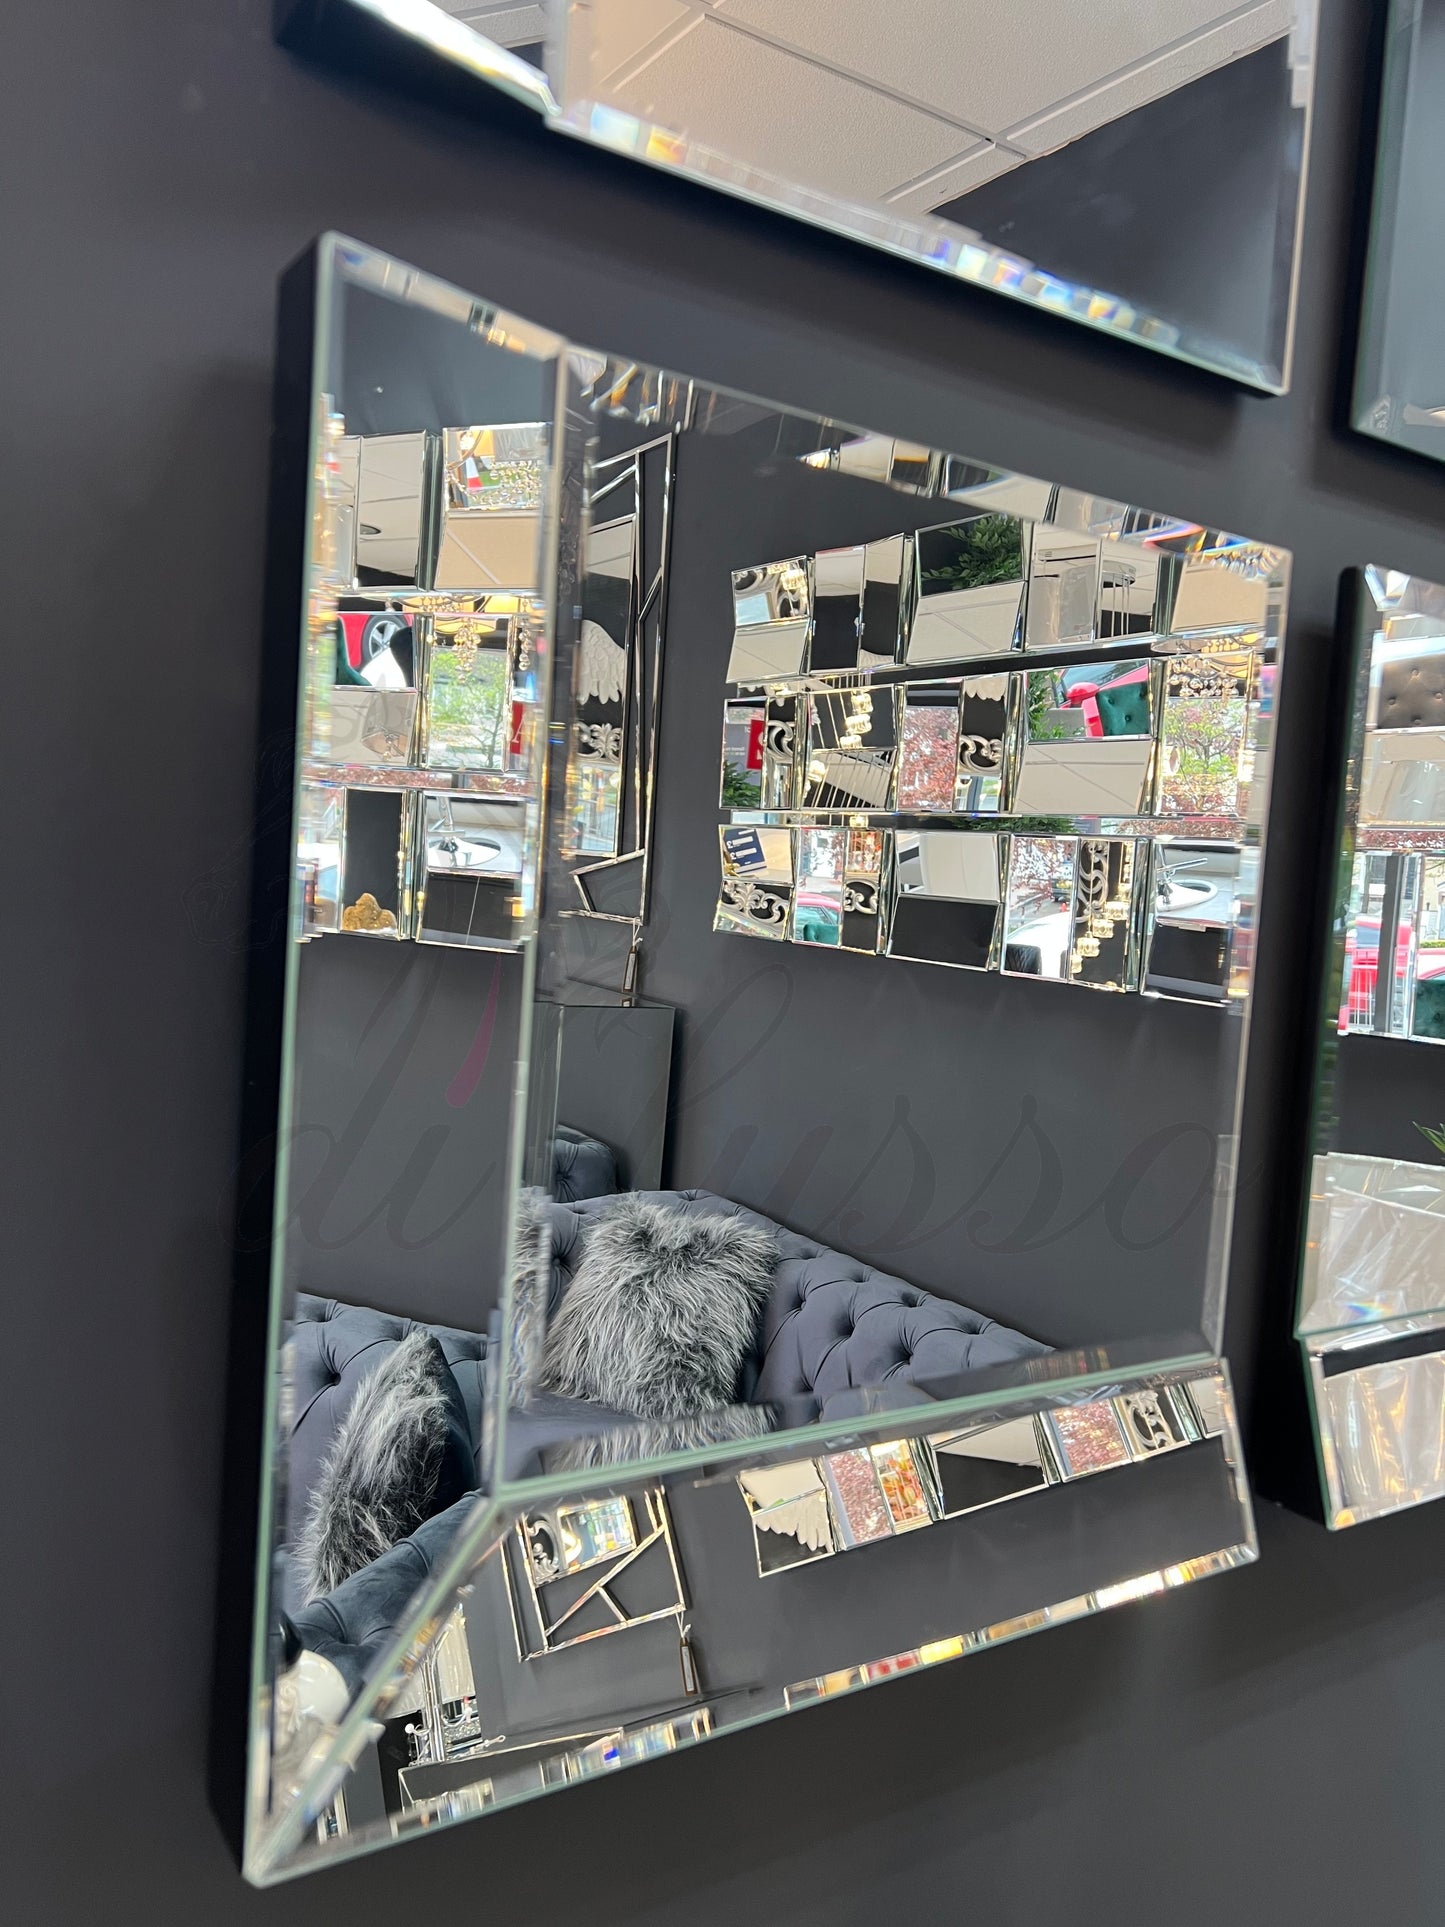 Set of 6 Panel Wall Mirrors